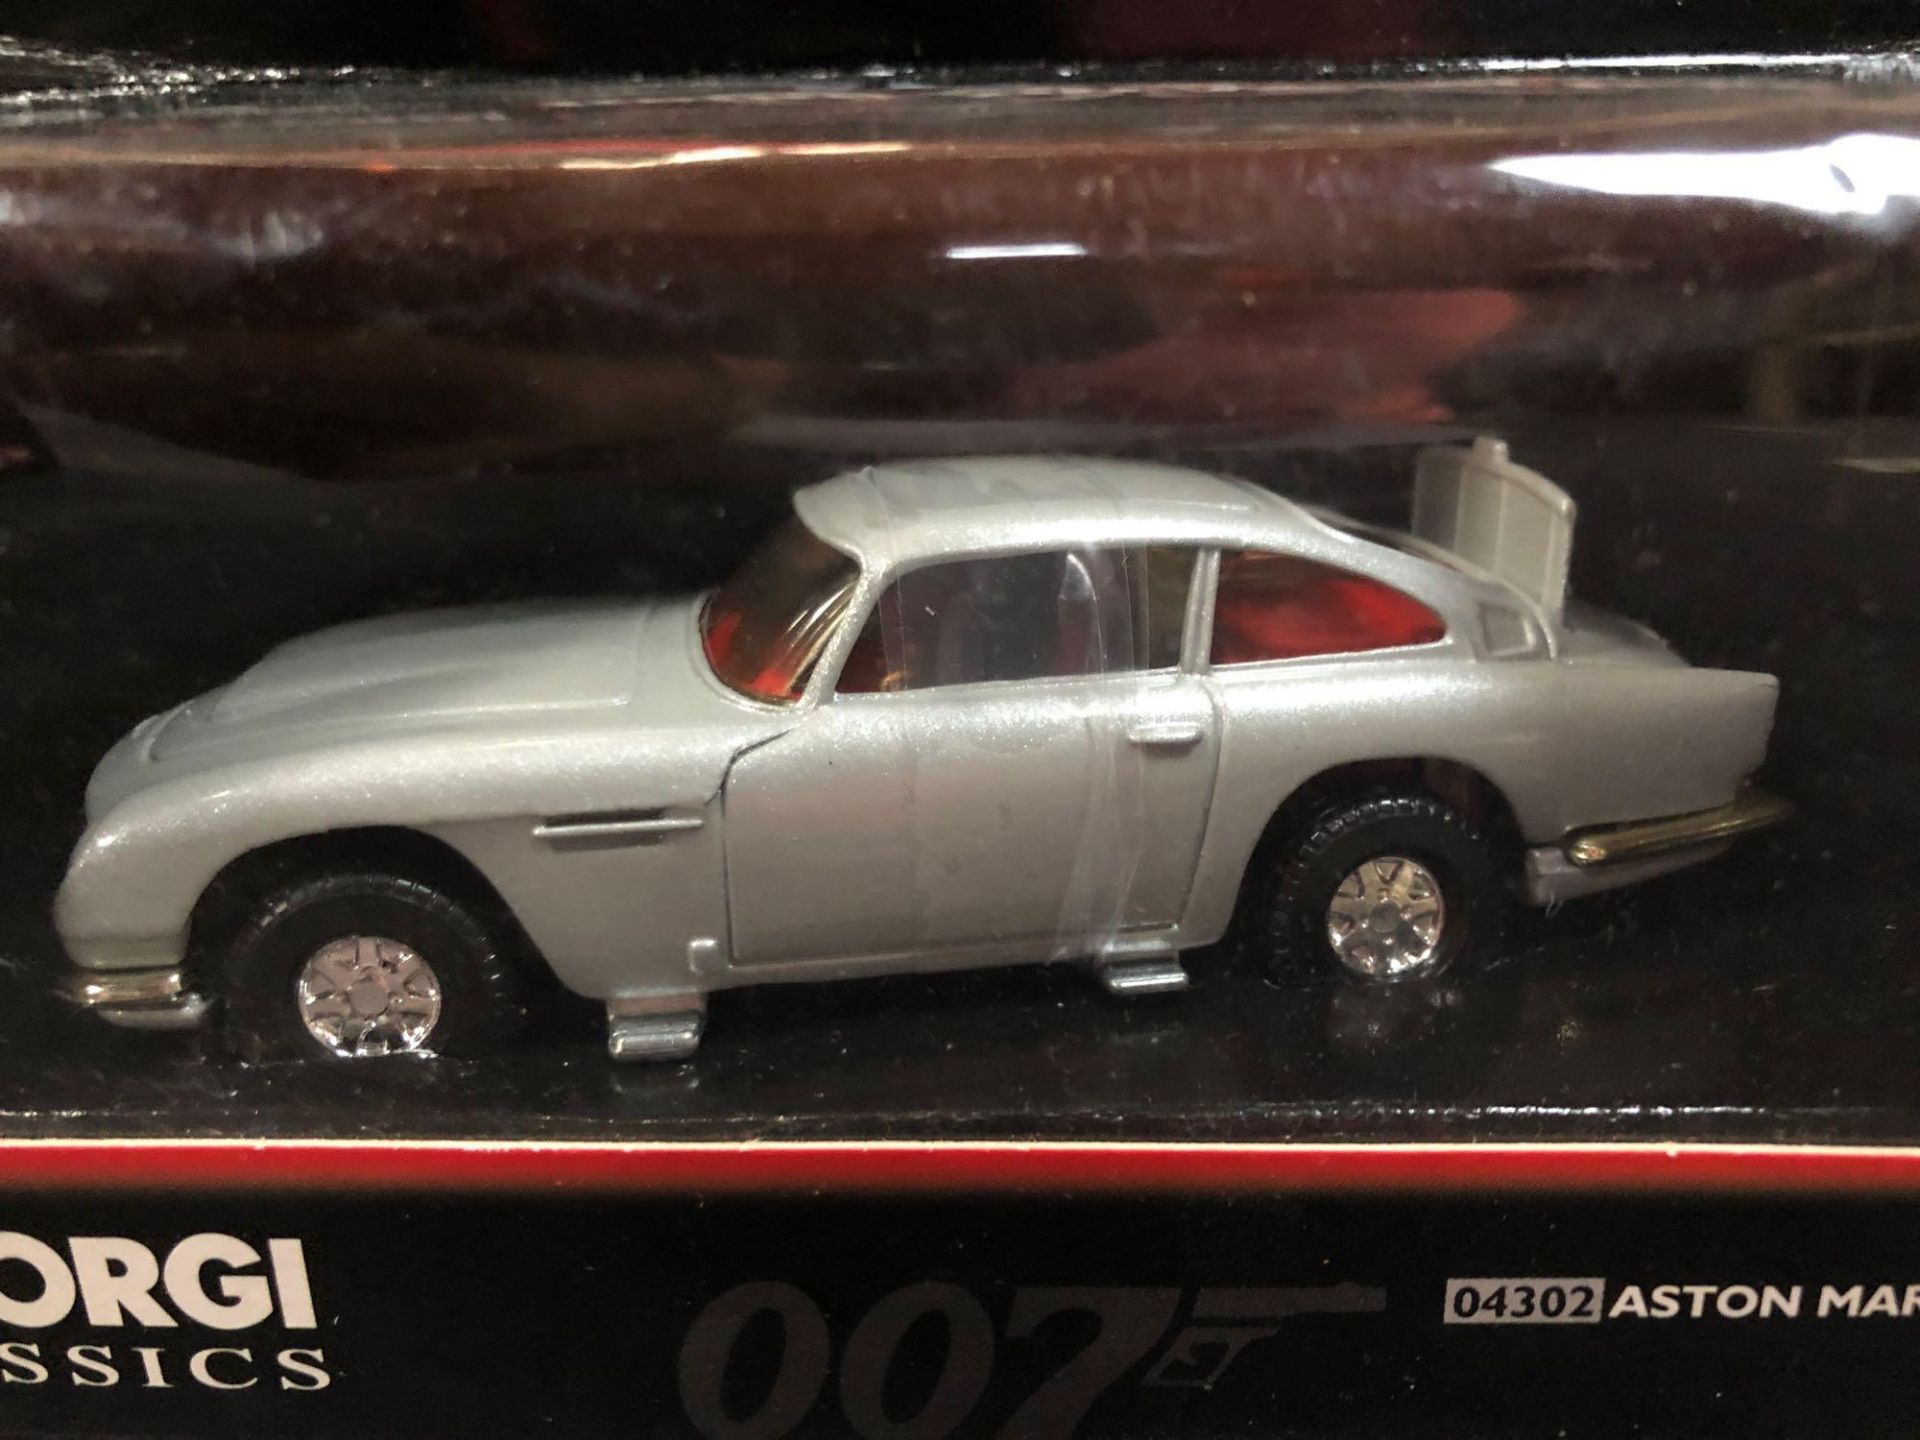 Corgi Classics 04302 James Bond 007 Tomorrow Never Dies Aston Martin Dbs In Box - Image 2 of 2